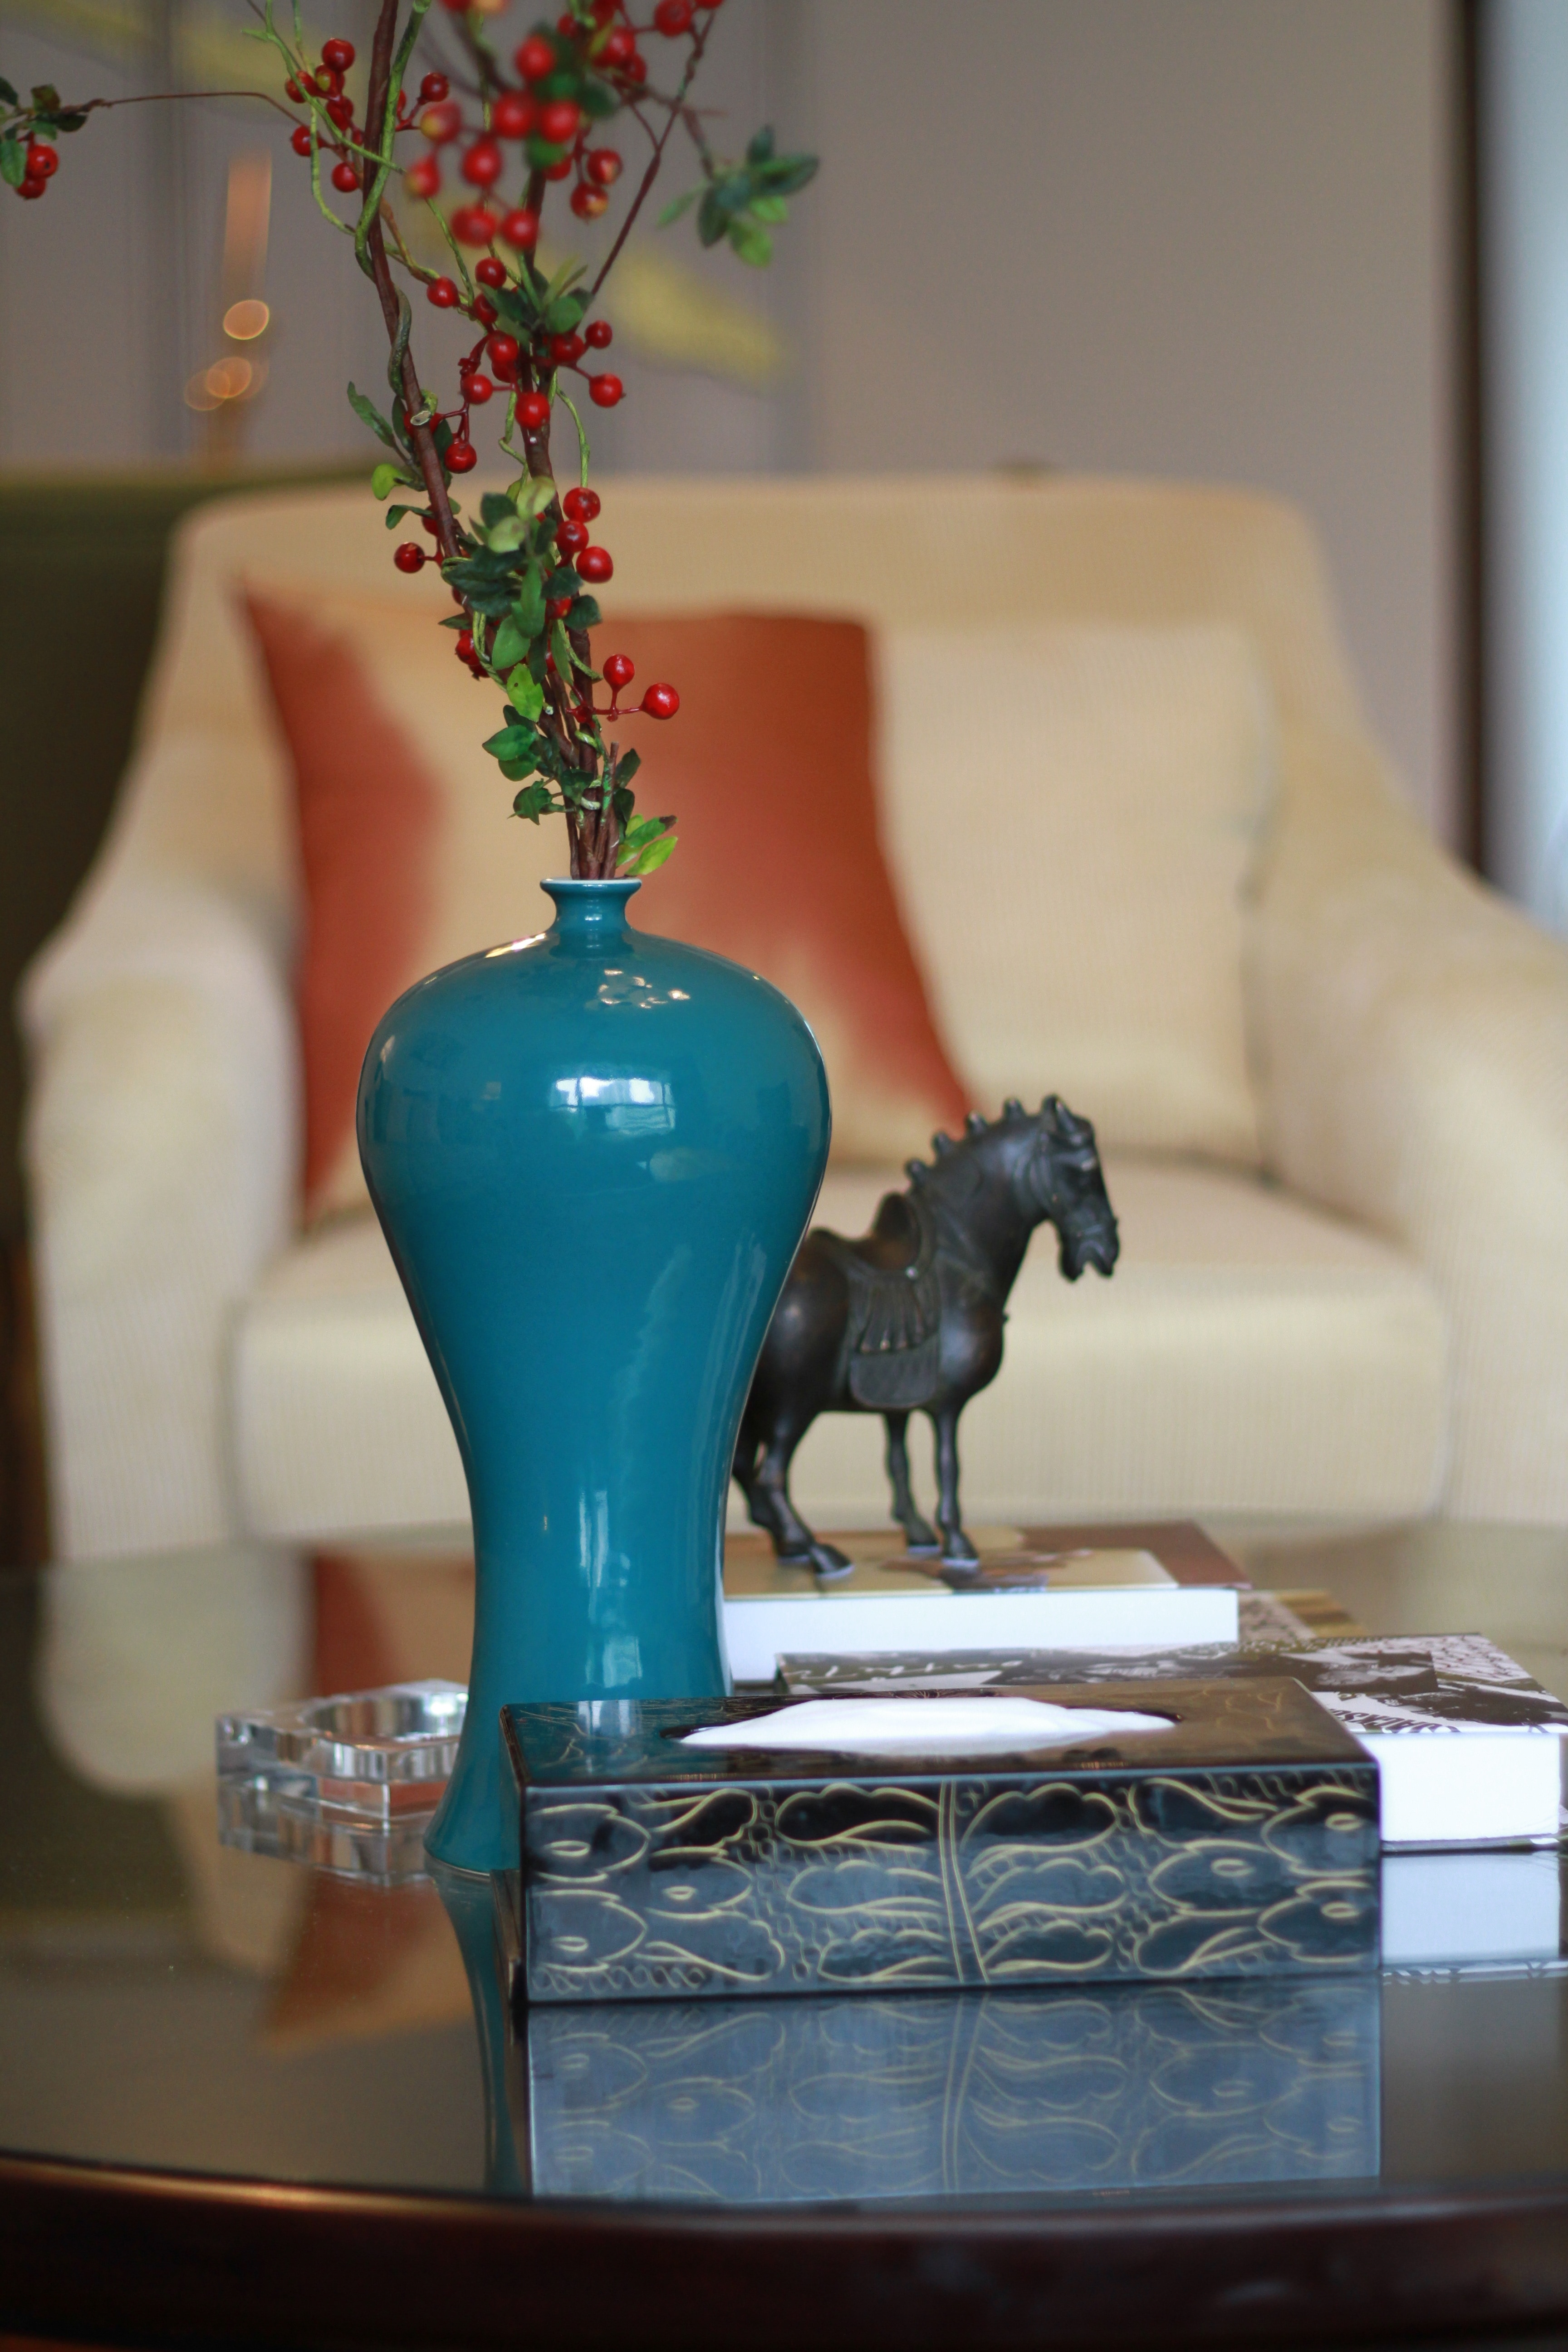 black horse figurine on book near blue flower vase on table